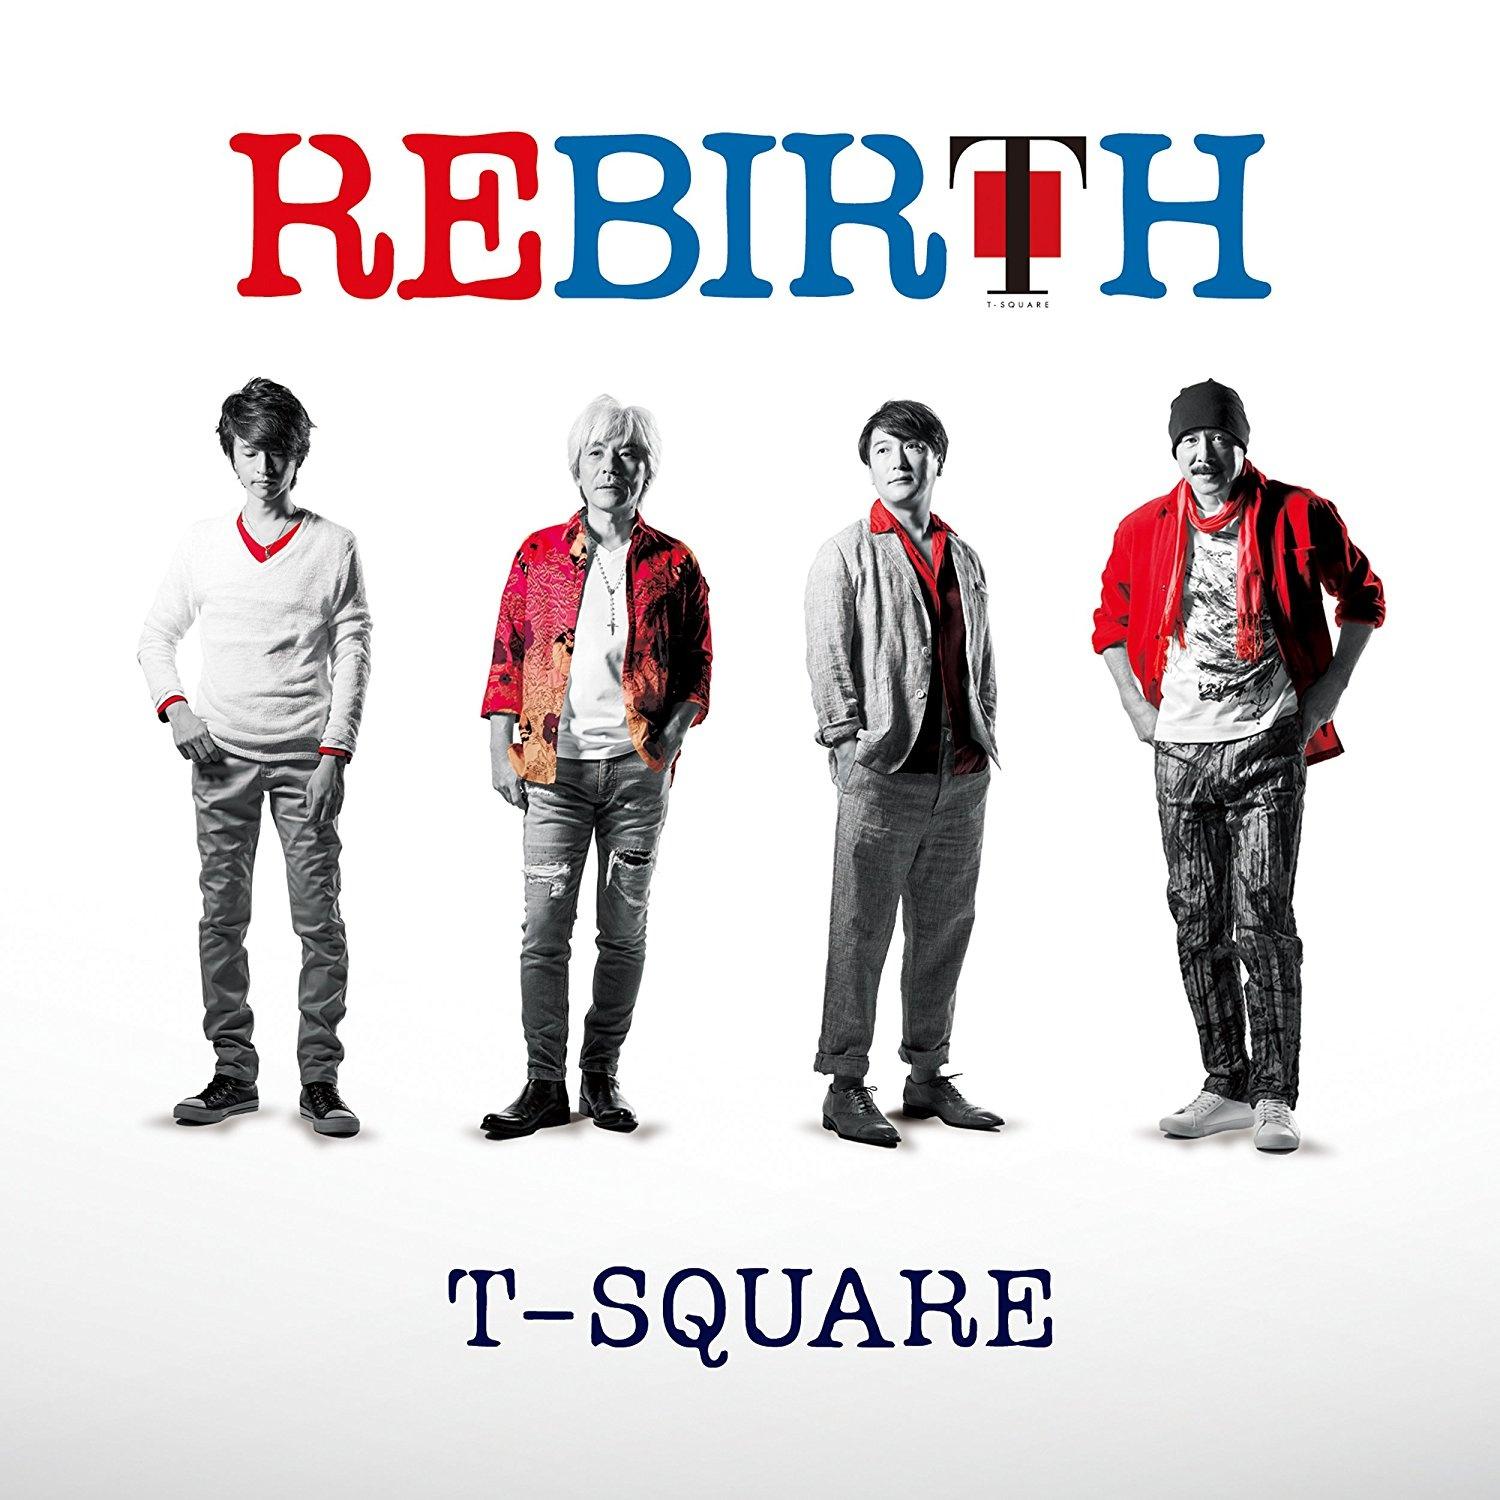 《rebirth》是日本男歌手t-square的一张音乐专辑,收录9首歌曲,发行于